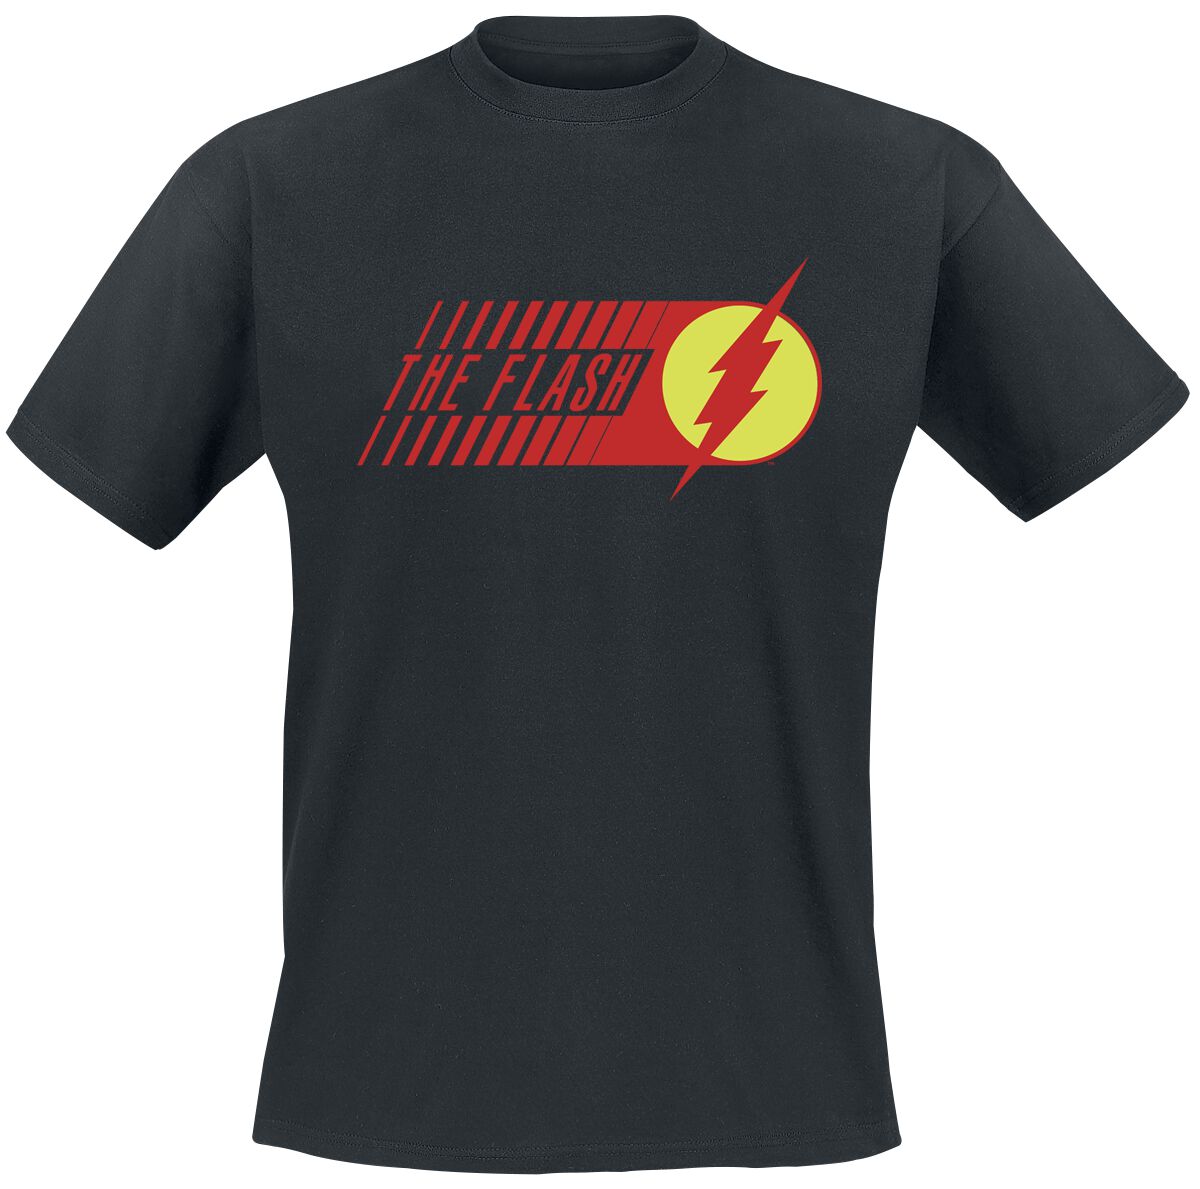 The Flash Flash - Starlabs T-Shirt schwarz in S